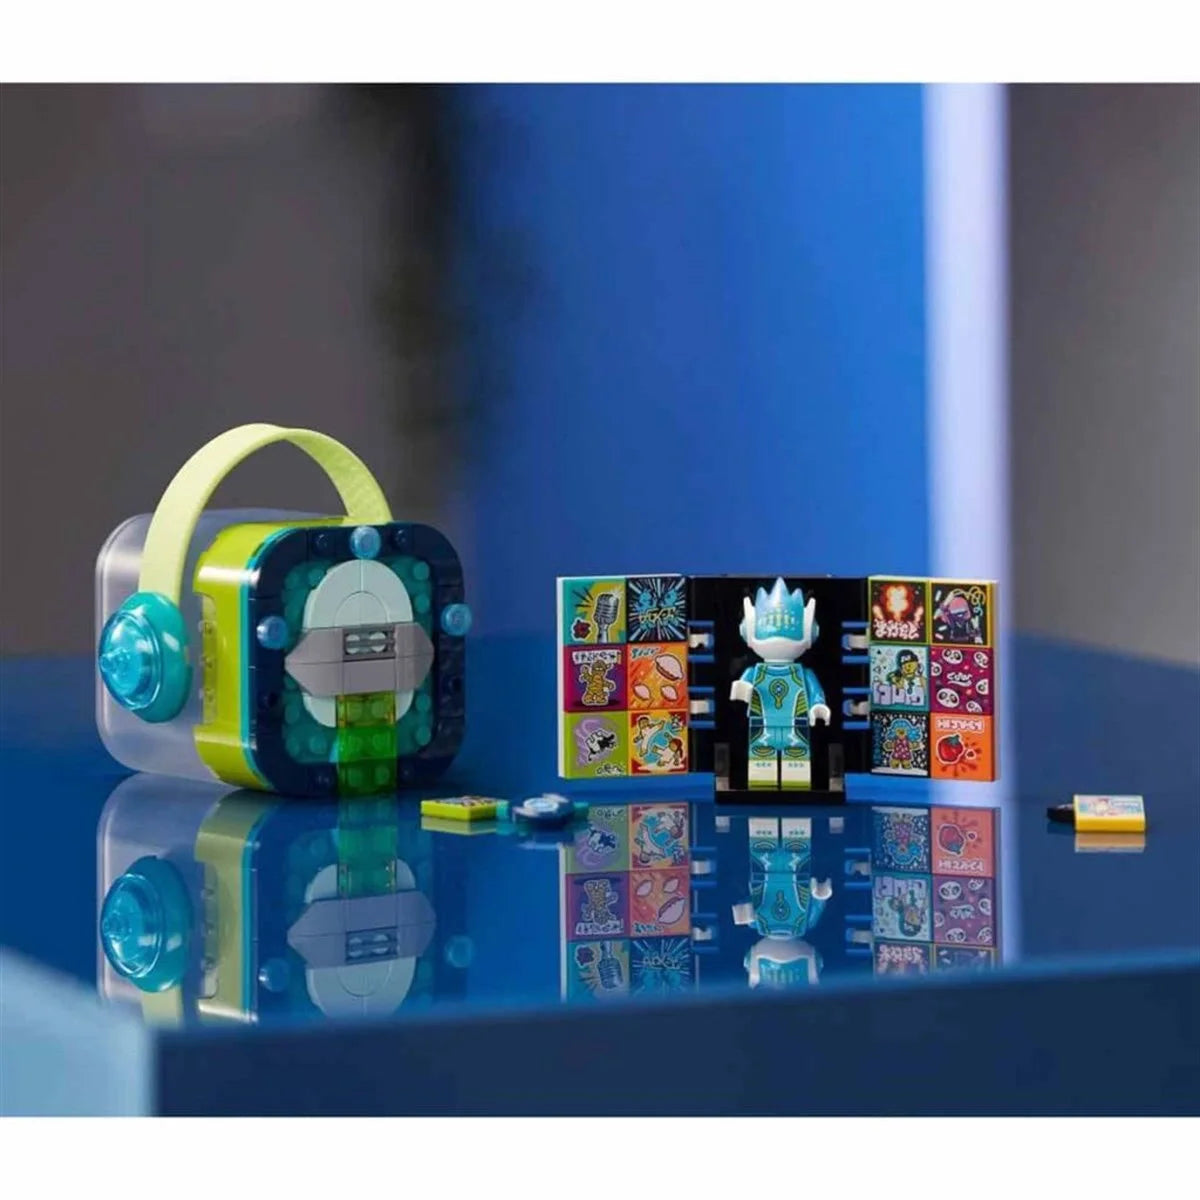 Lego Vidiyo Alien DJ BeatBox 43104 | Toysall